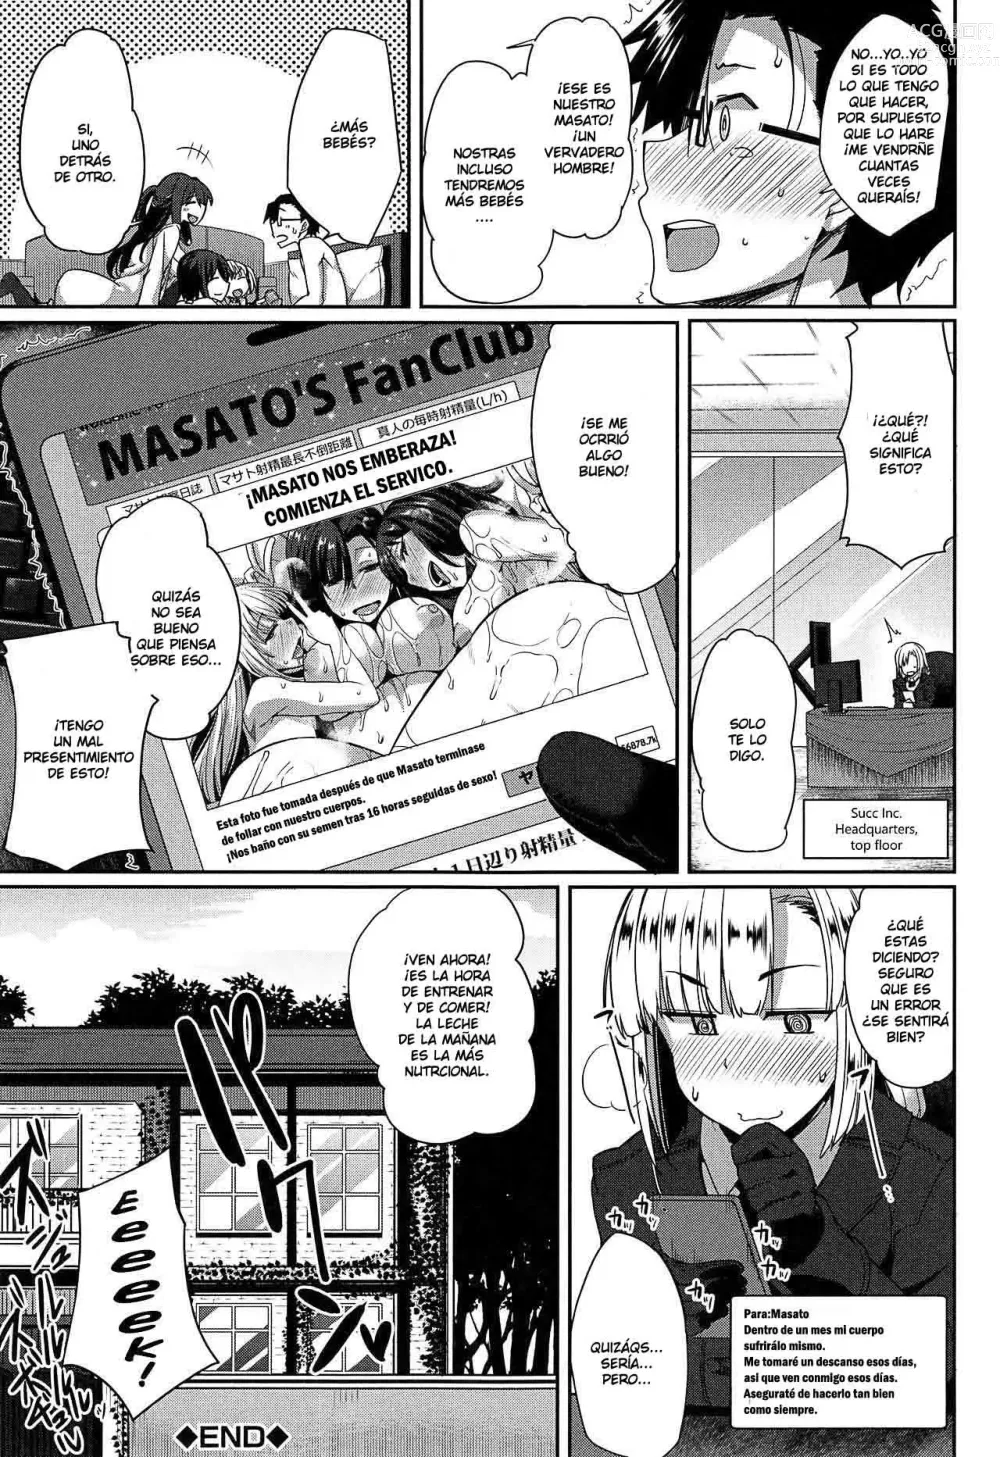 Page 237 of manga Inma no Mikata! (decensored)